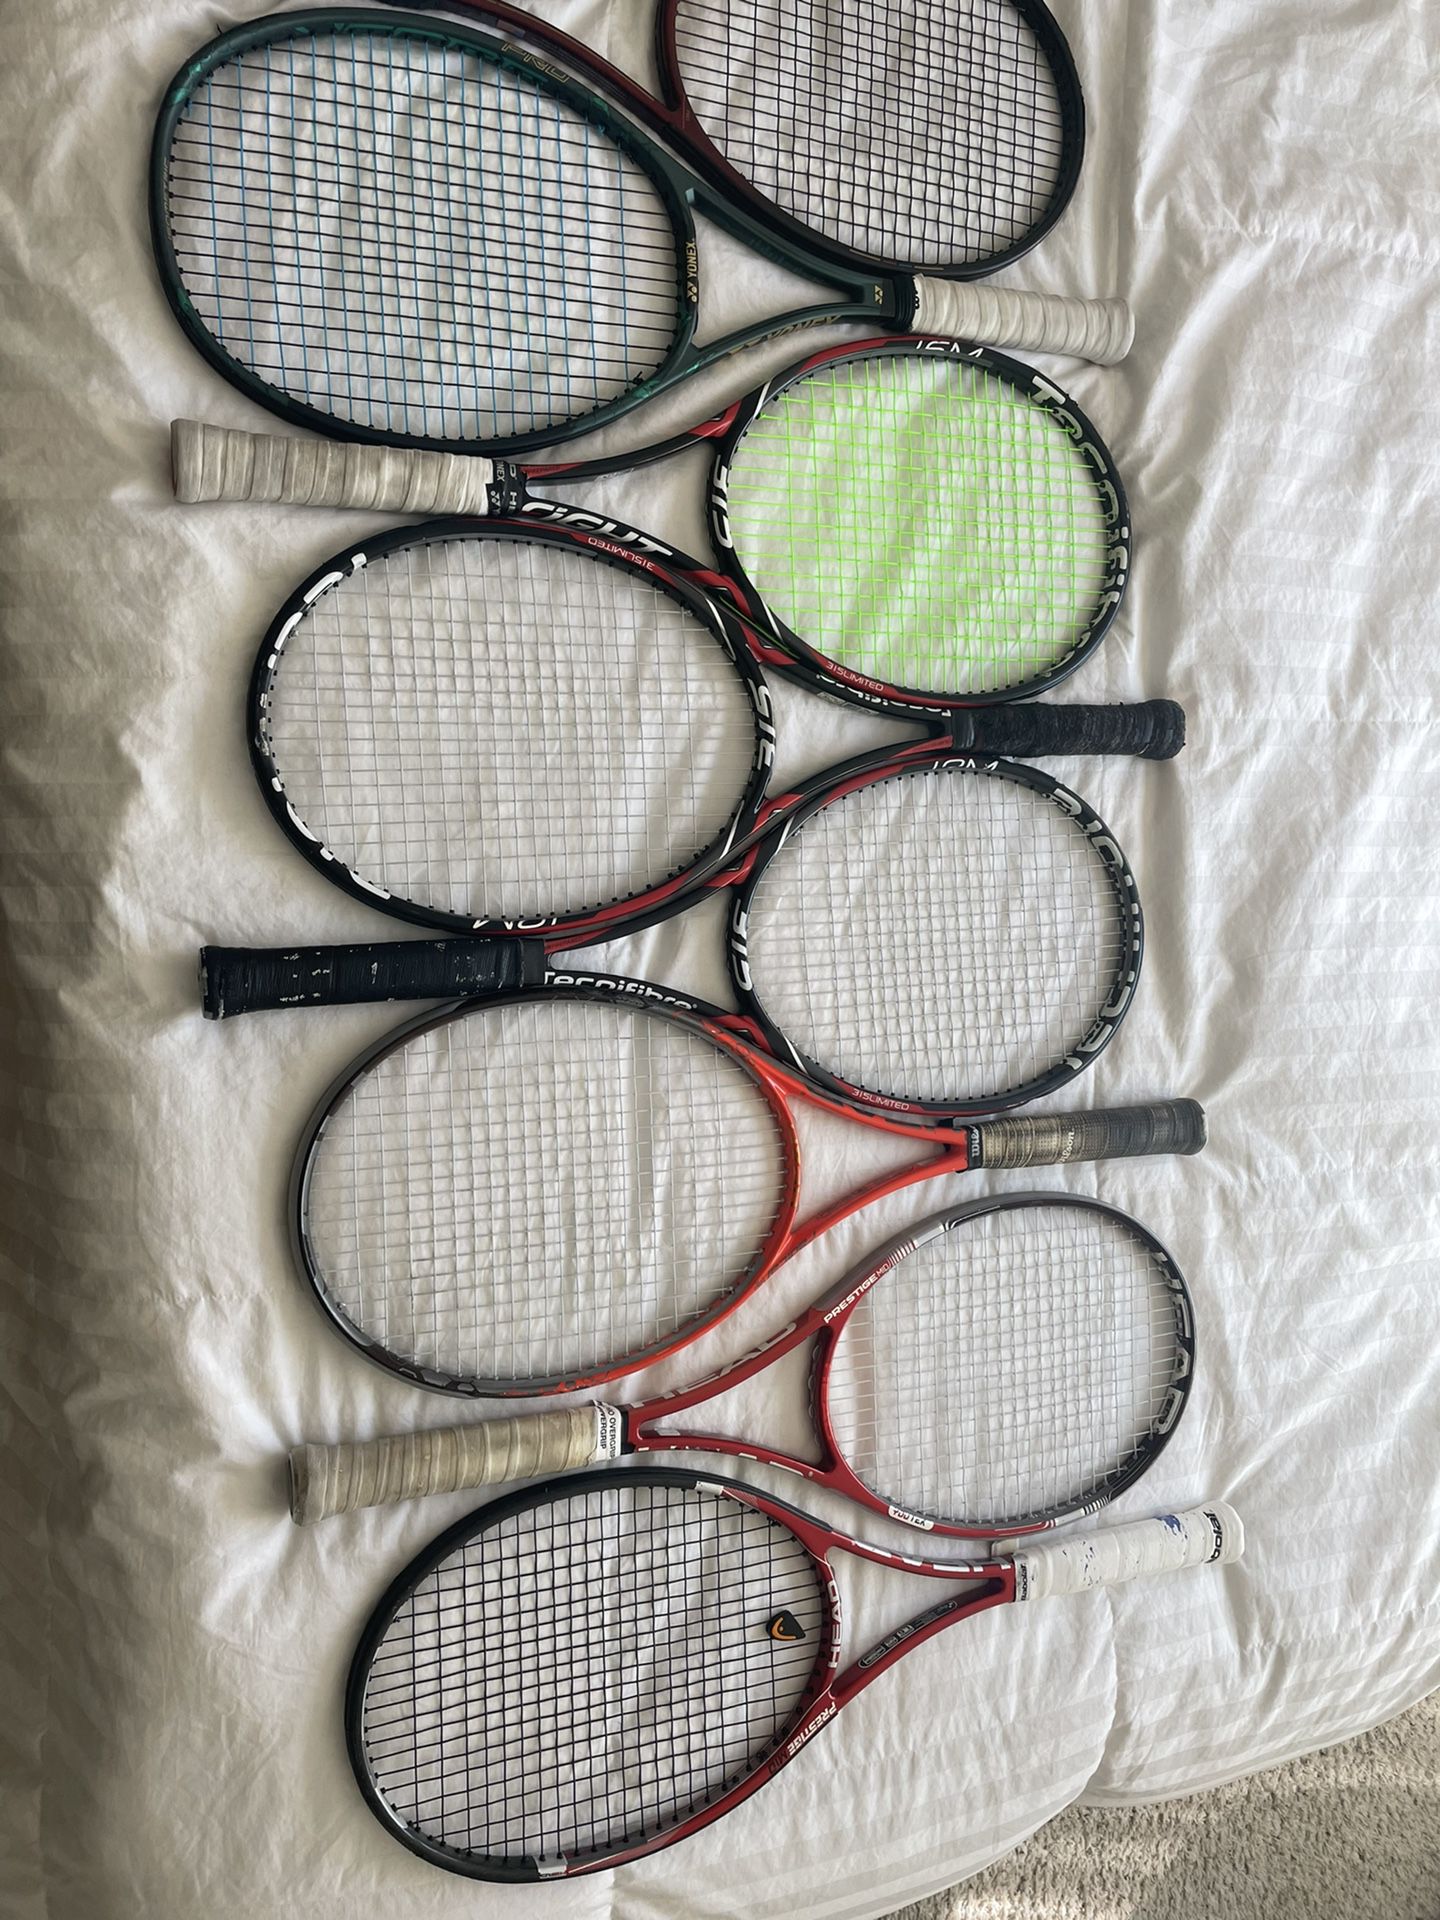 Tennis Rackets For Sale - Head, Wilson, Tecnifibre